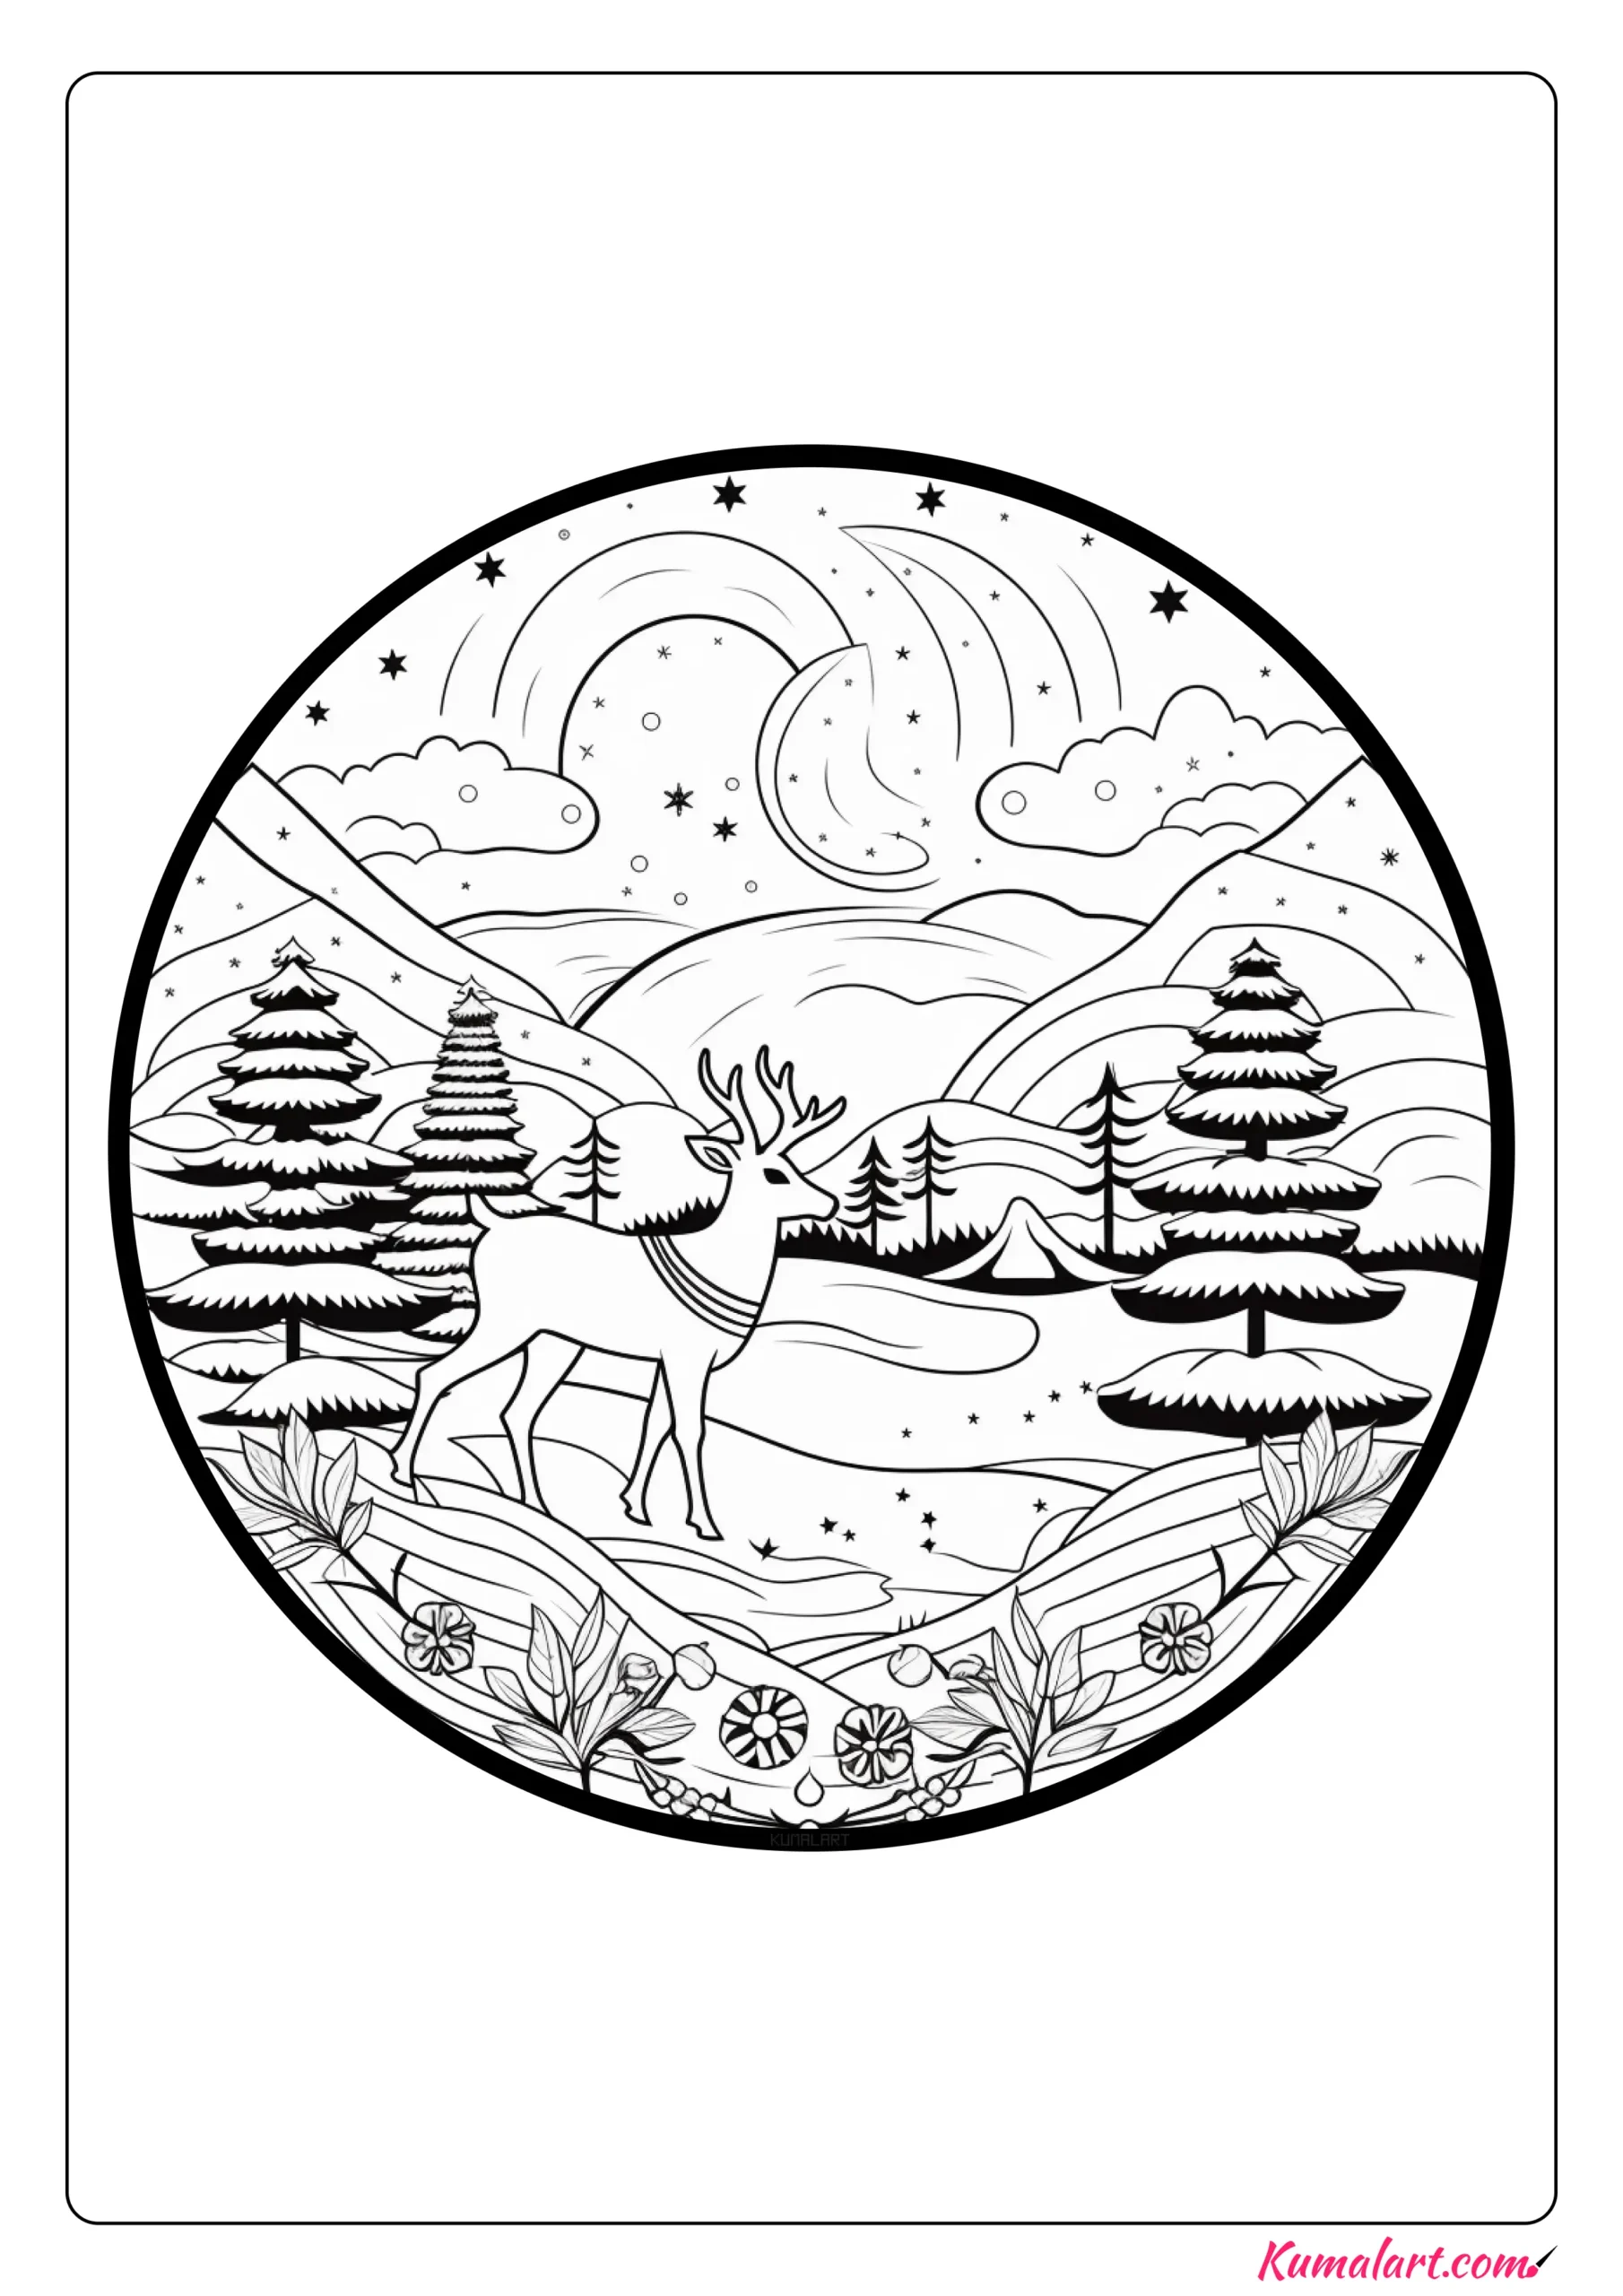 Sparkly Christmas Mandala Coloring Page